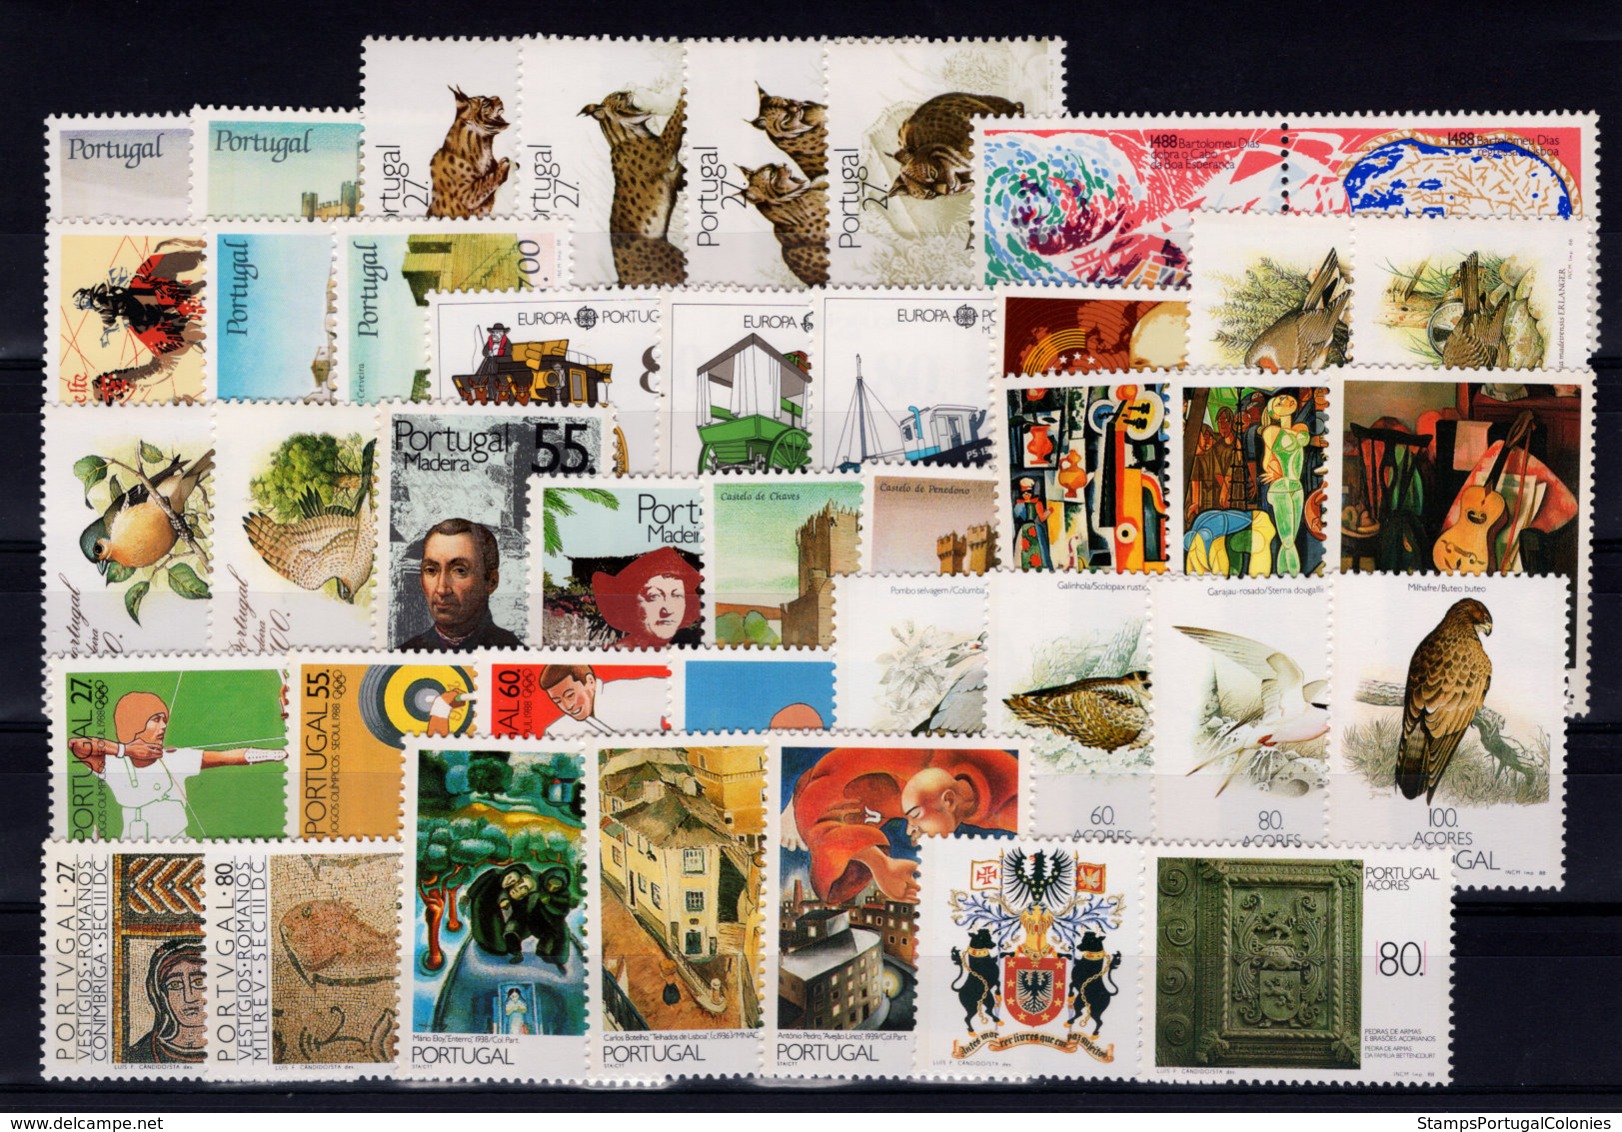 1988 Portugal Azores Madeira Complete Year MNH Stamps. Année Compléte NeufSansCharnière. Ano Completo Novo Sem Charneira - Années Complètes